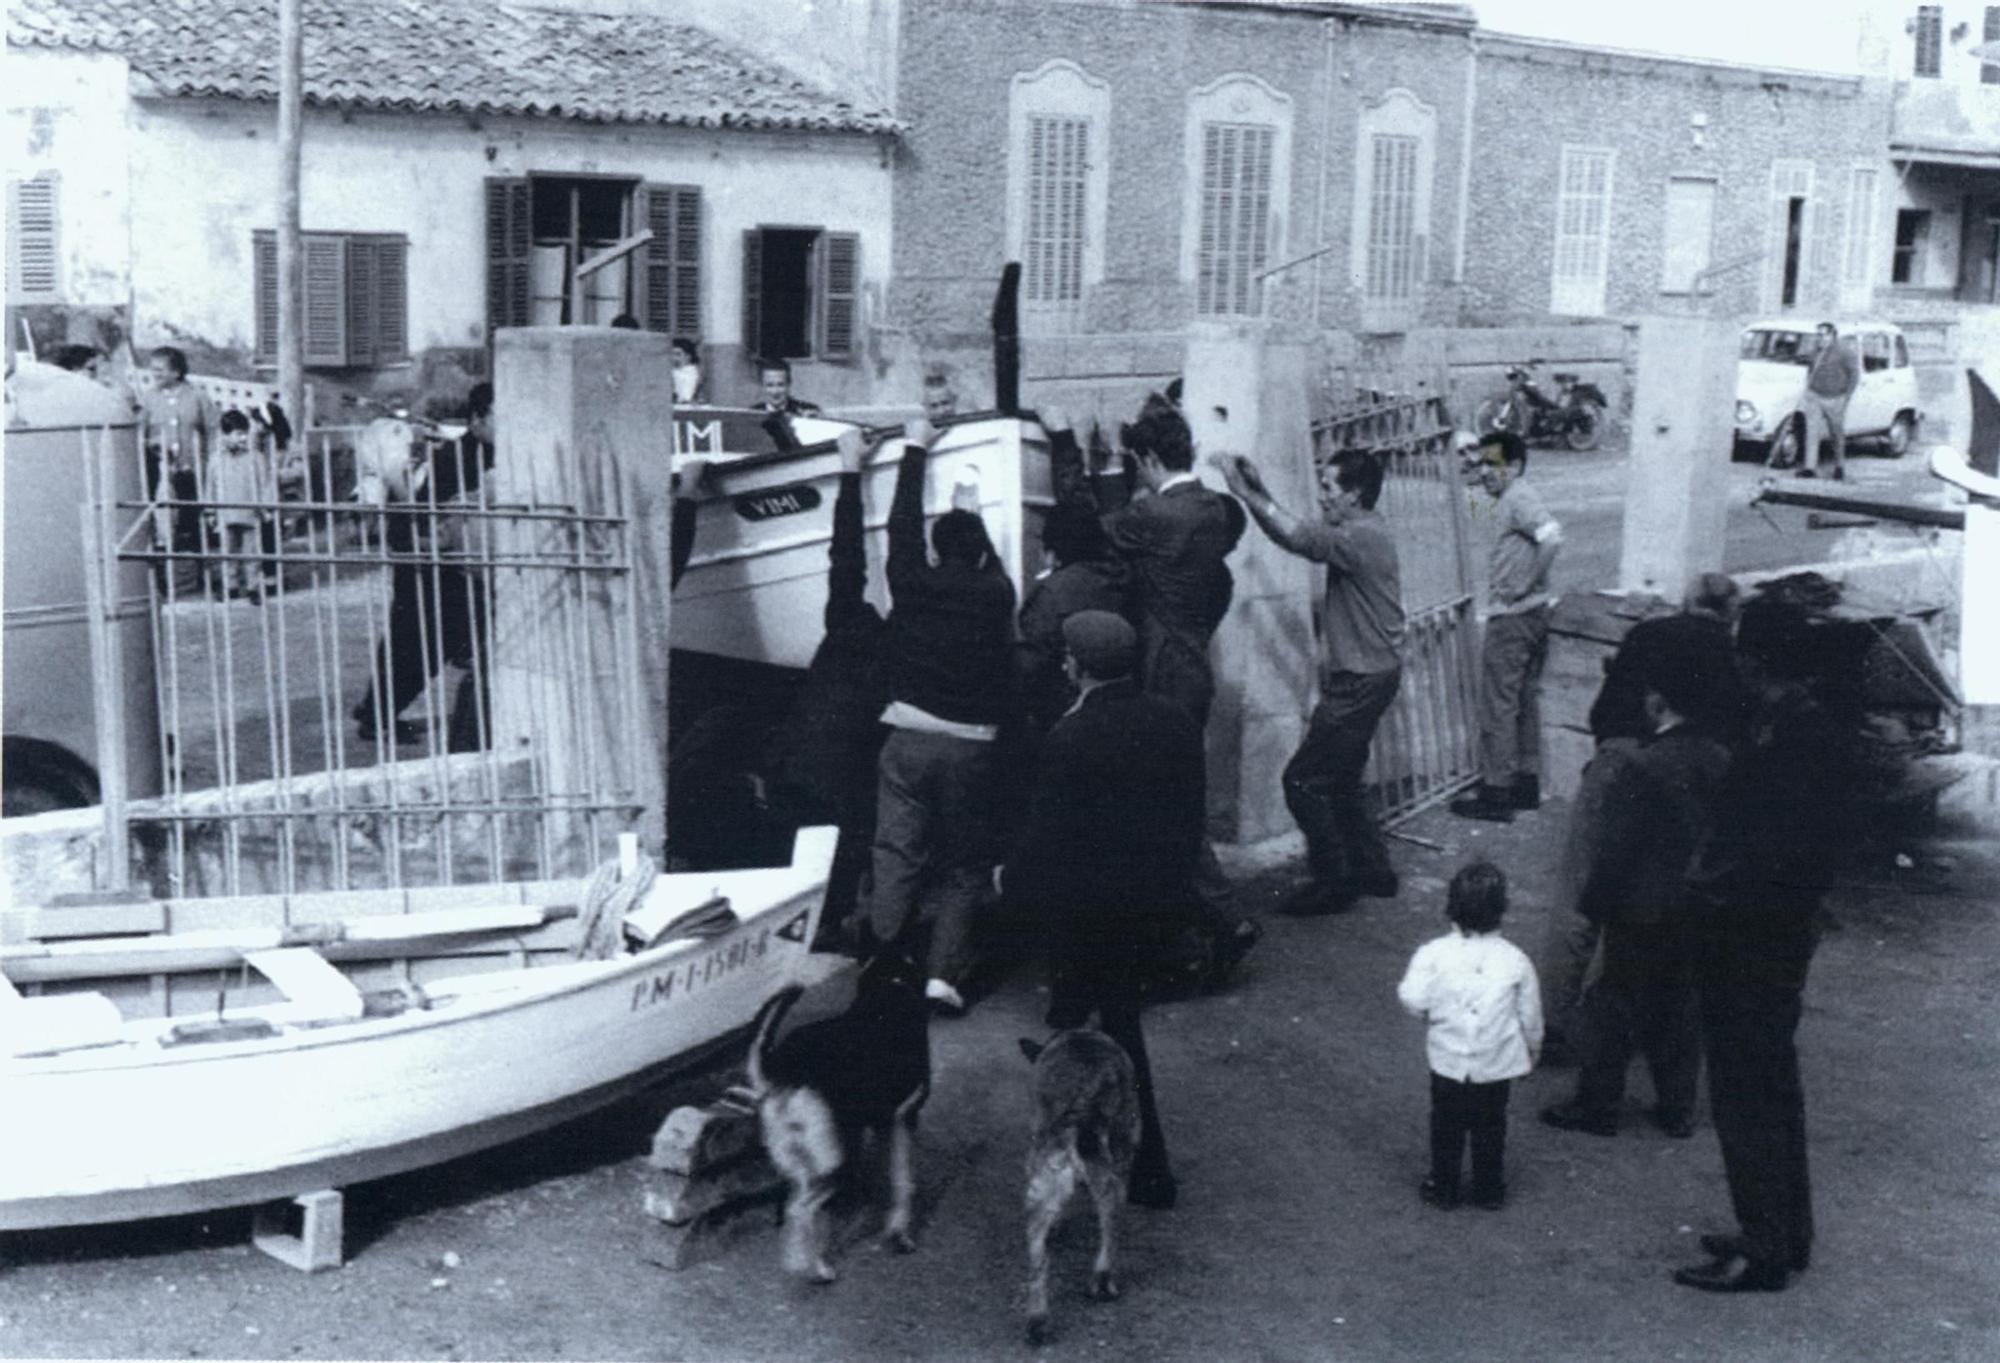 Blick ins Mallorca-Archiv: So sah es früher in Es Molinar und Portitxol aus